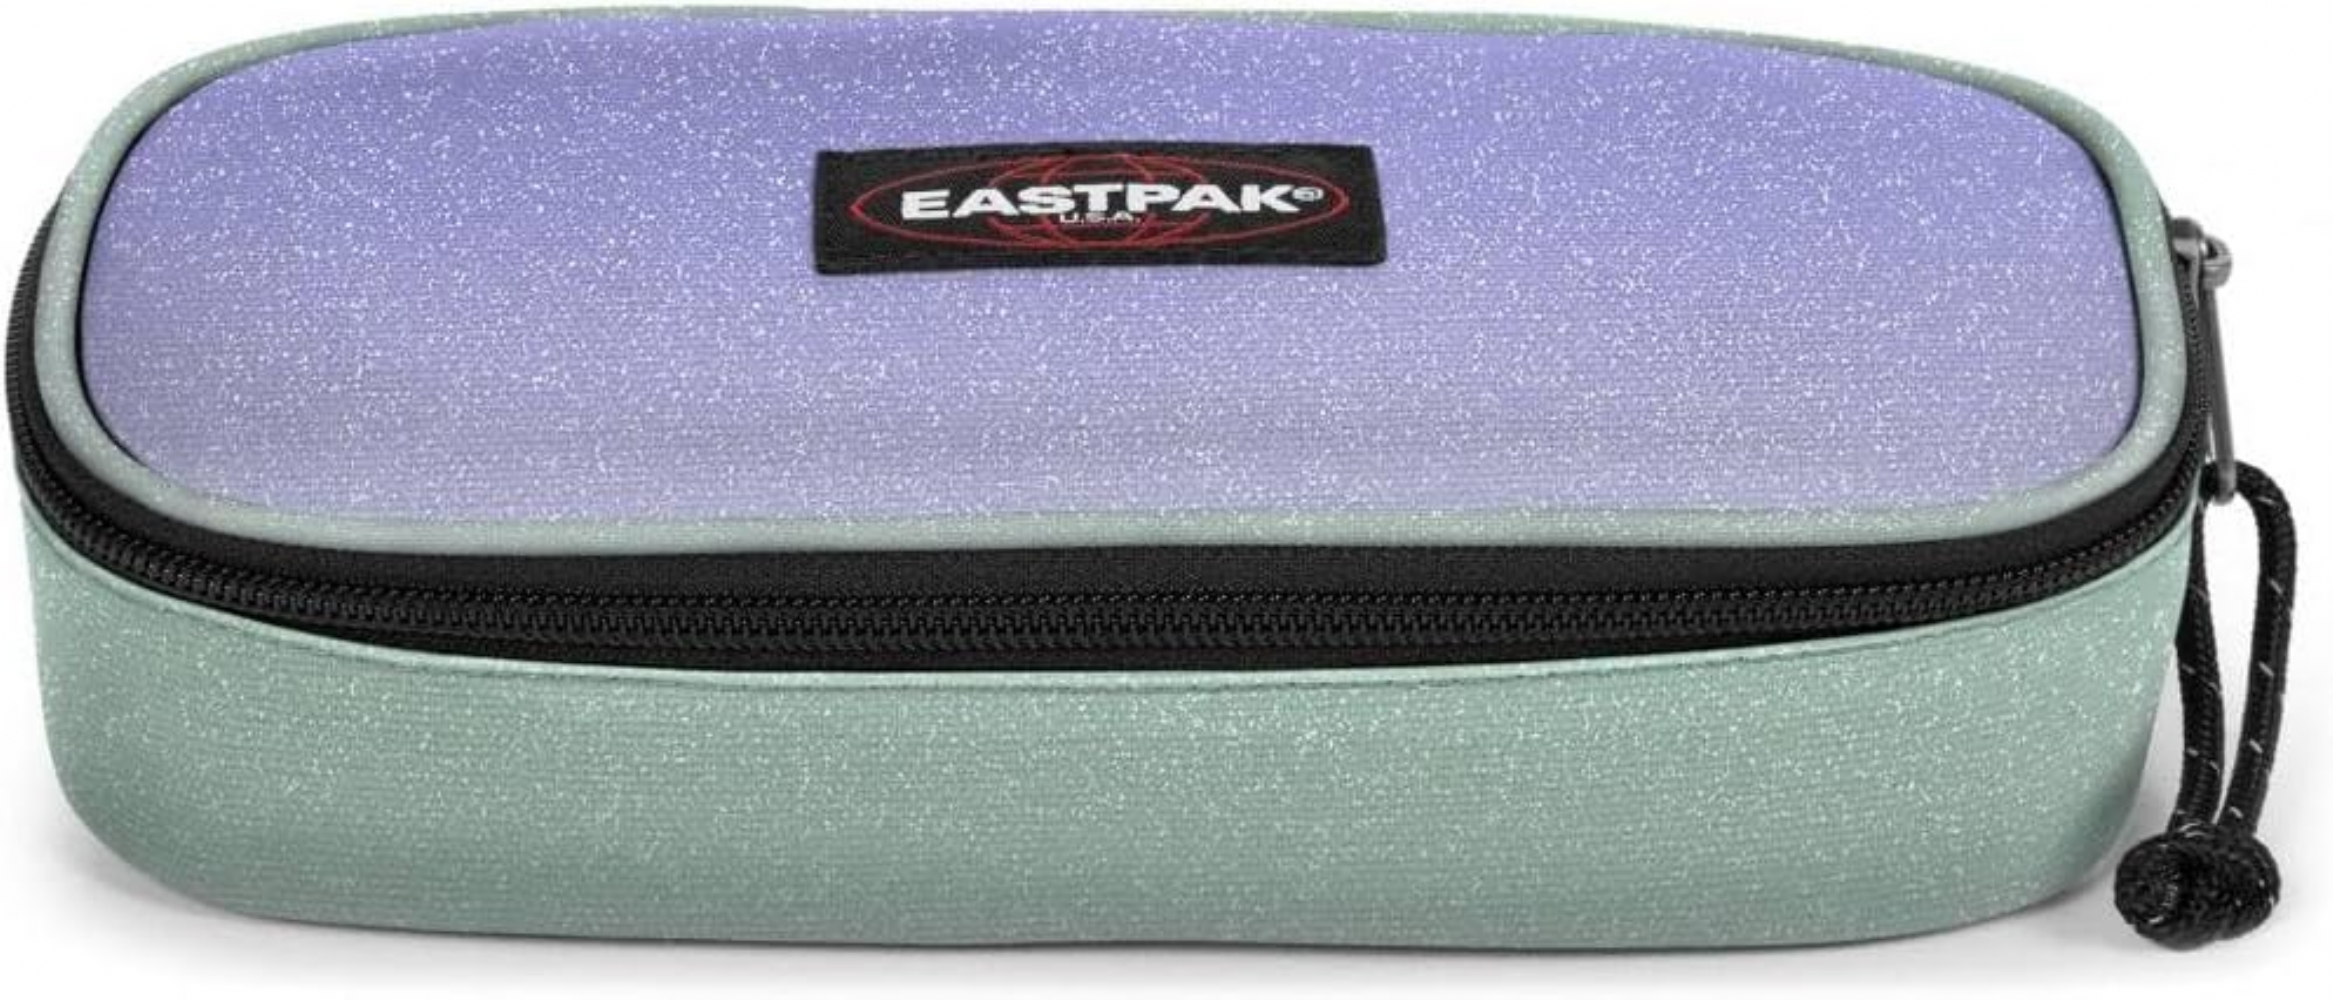 Eastpak - Astuccio Oval Single 9D6 - Spark Degrade - Colore Lilla